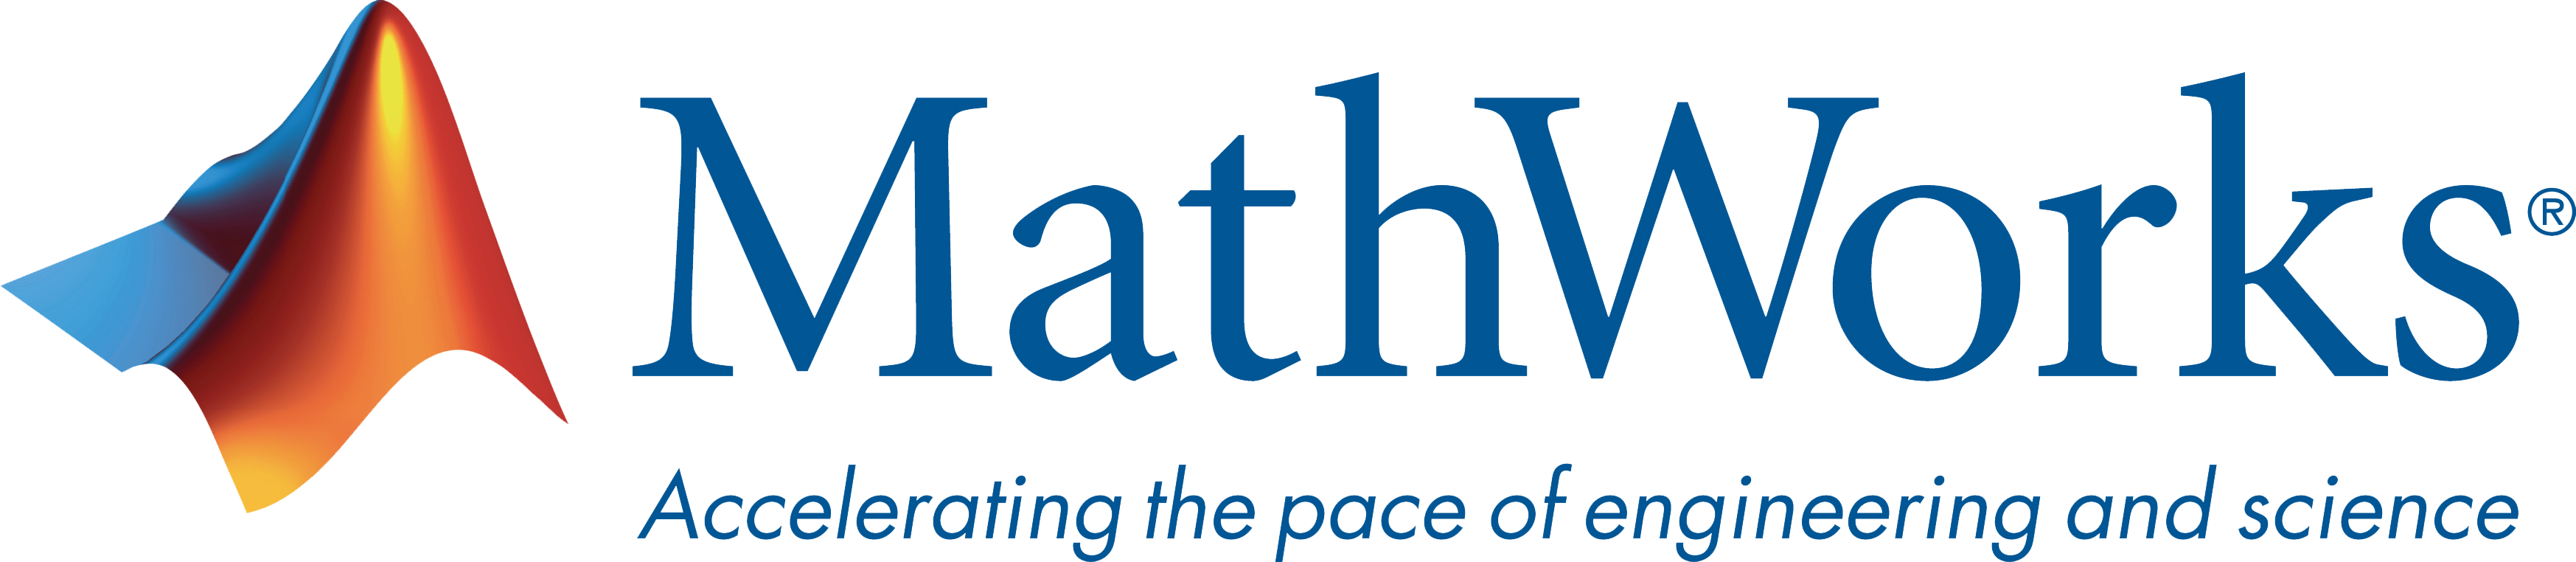 MathWorks Logo clear